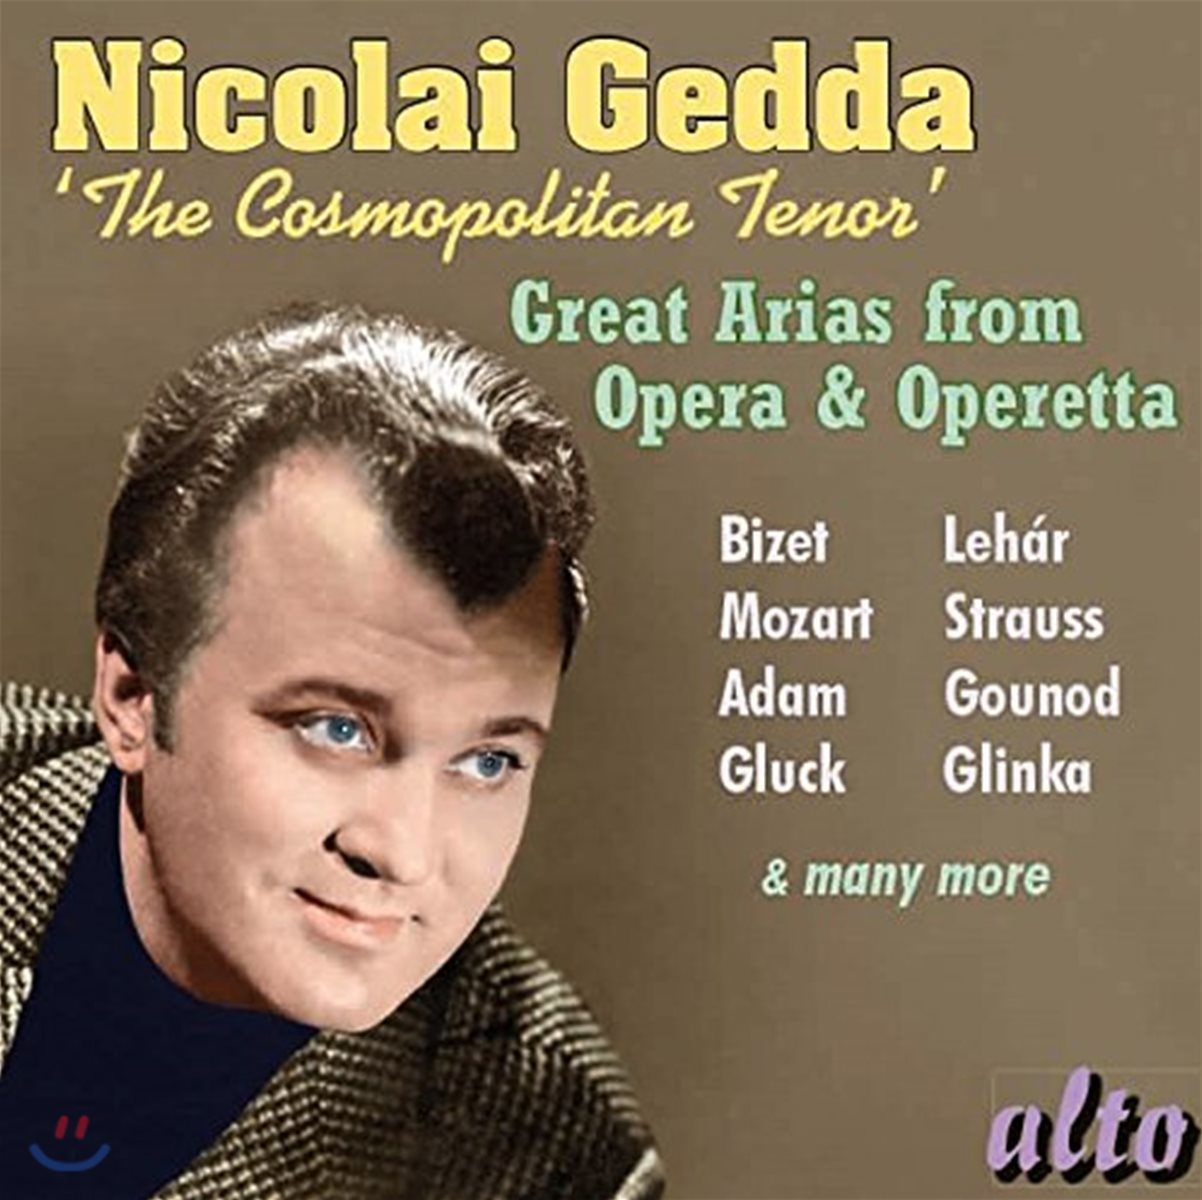 Nicolai Gedda 니콜라이 게다가 노래하는 오페라 &amp; 오페레타 아리아 명곡집 (The Cosmopolitan Tenor - Great Arias from Opera &amp; Operetta)